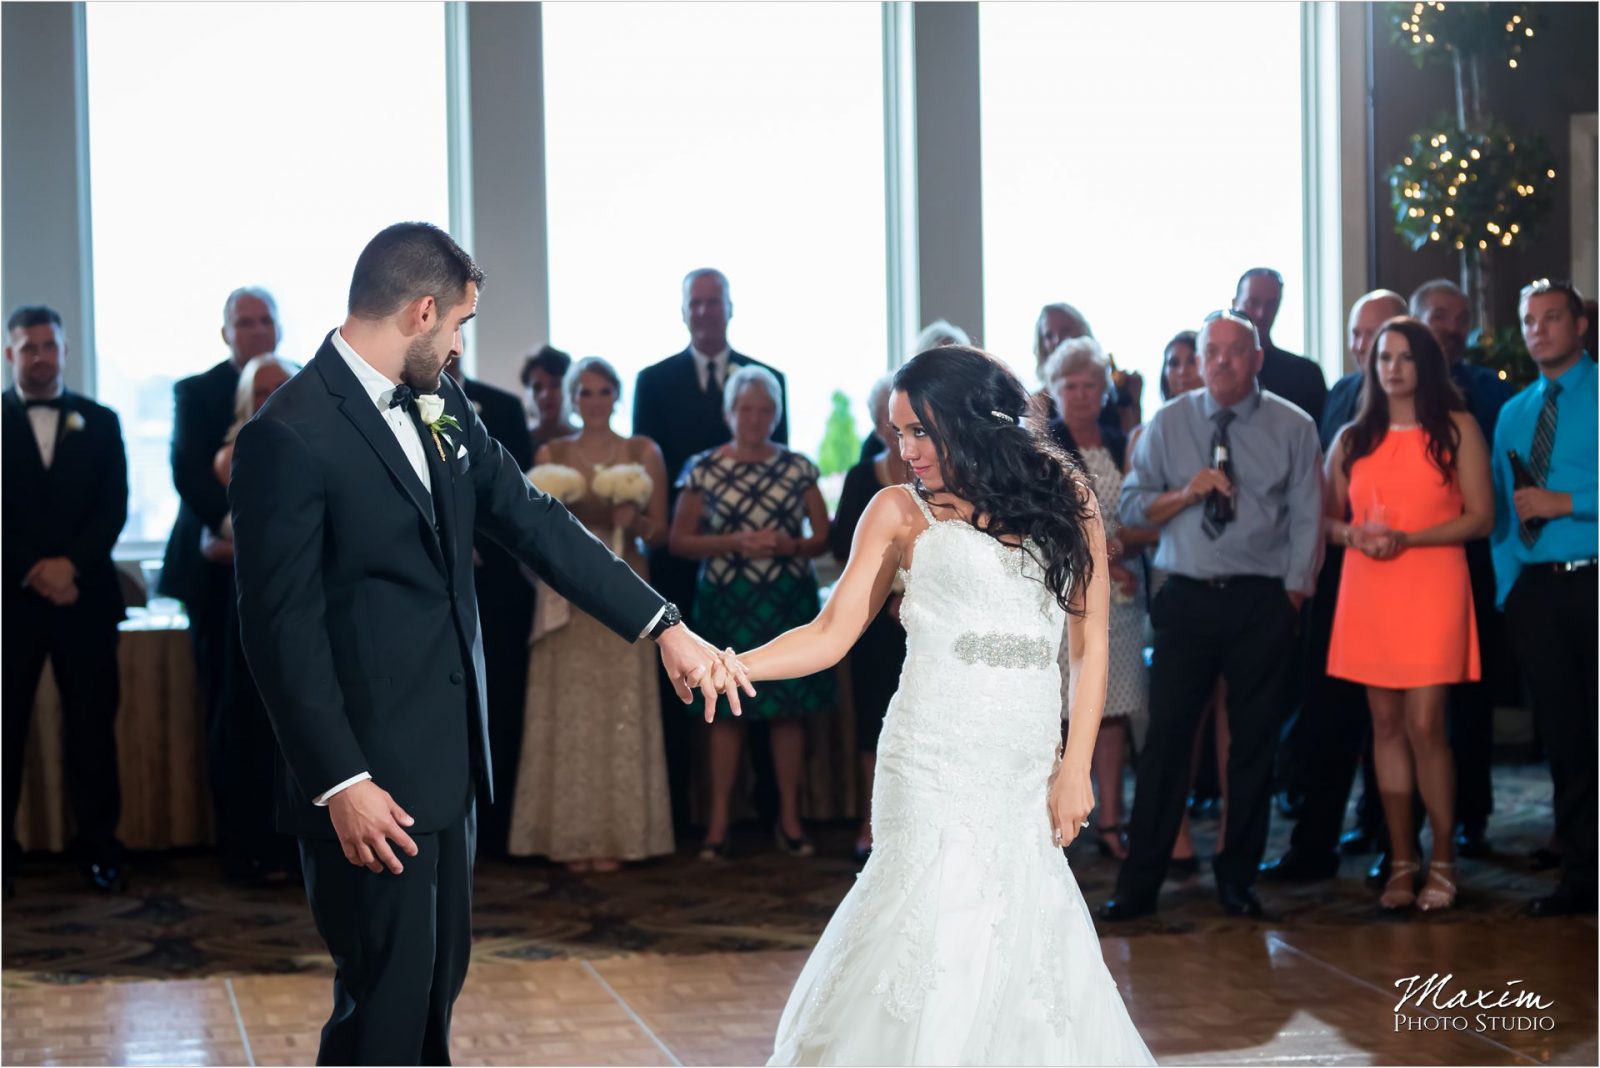 Drees Pavilion Covington Kentucky Wedding Reception Dance